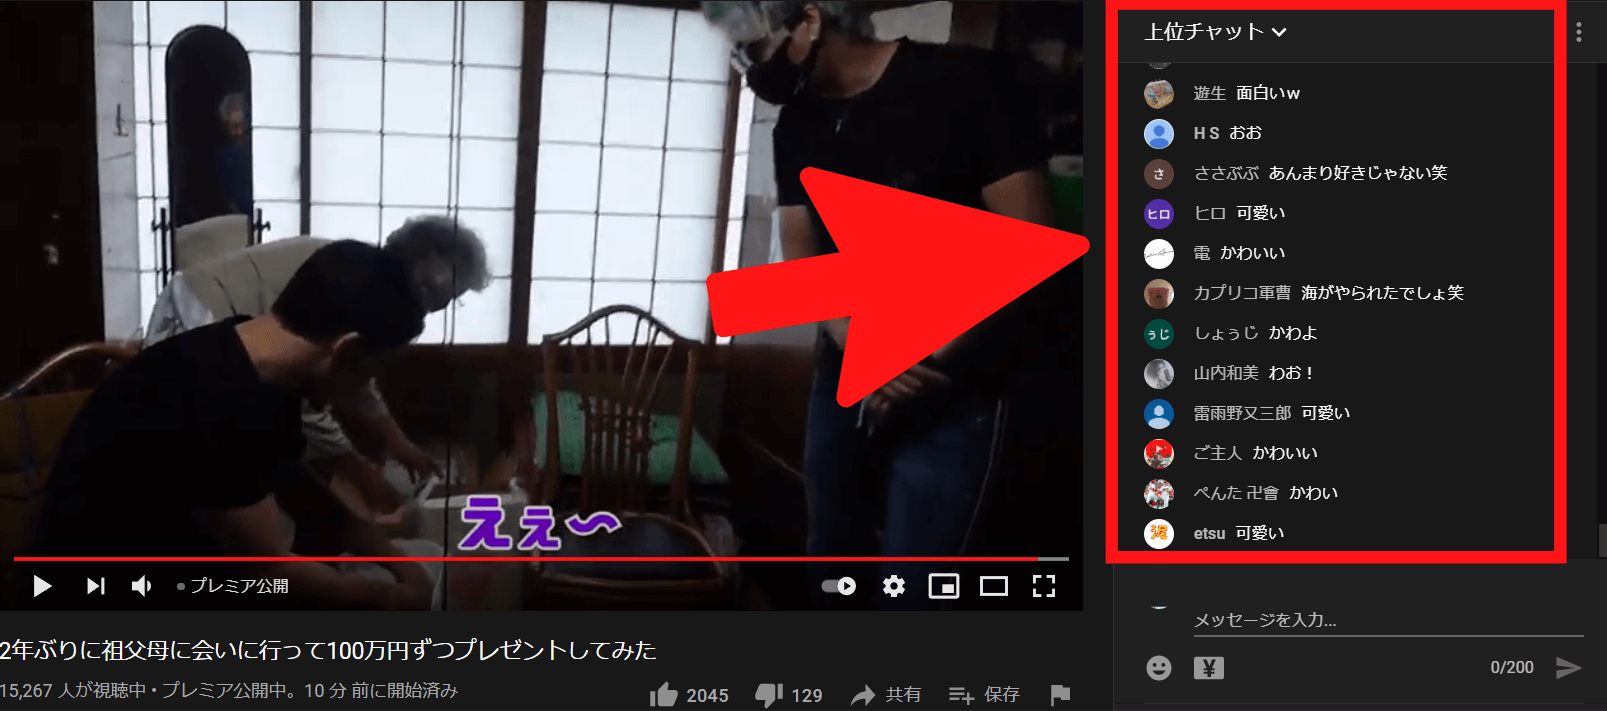 youtube-mikuru asakura-premier upload